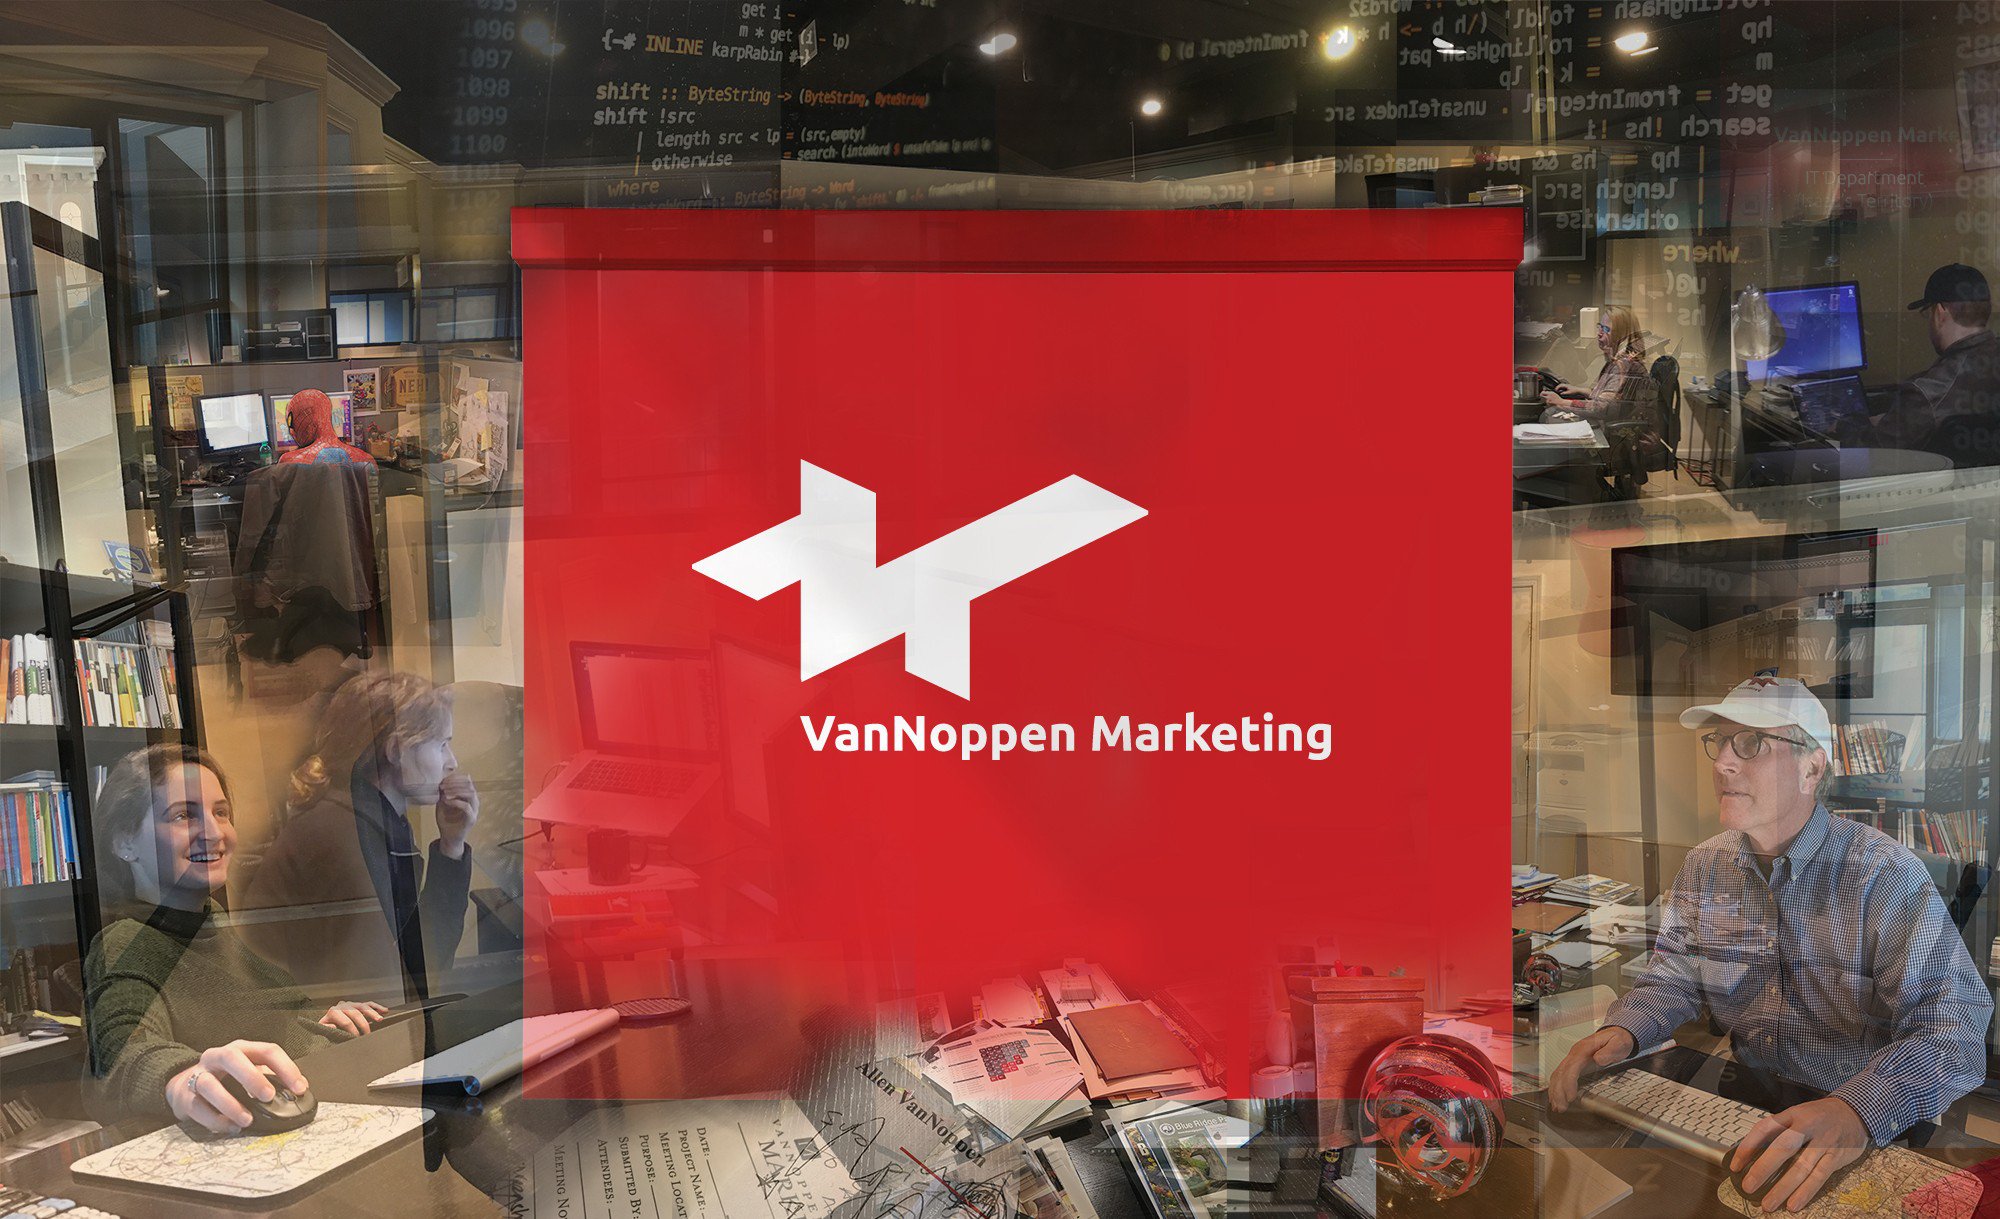 VanNoppen Marketing specializes in website design, website development, social media marketing, AdWords, graphic design, logos, and more.